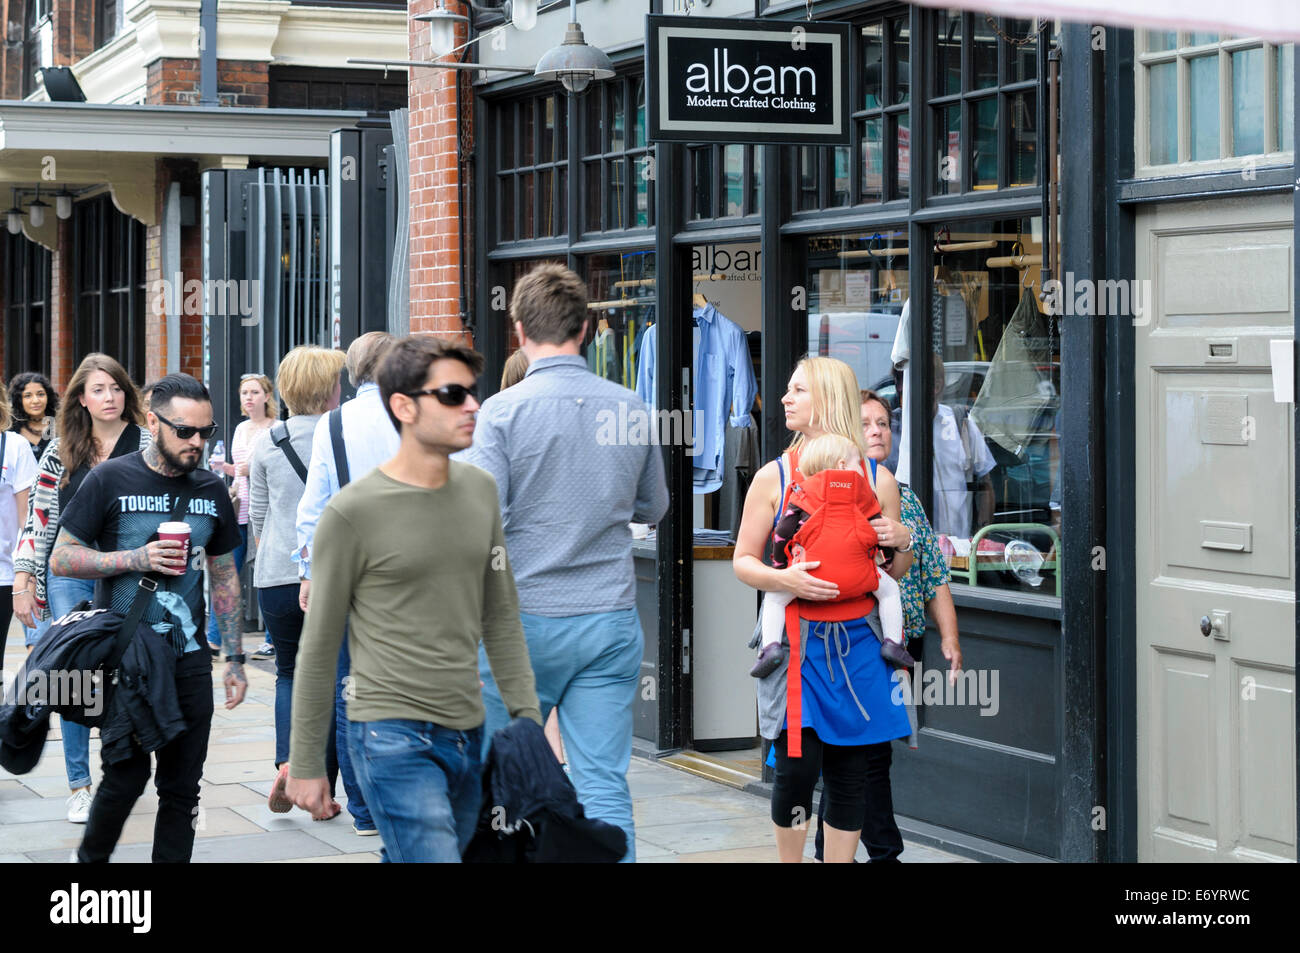 ALBAM shop in Spitafields Stock Photo